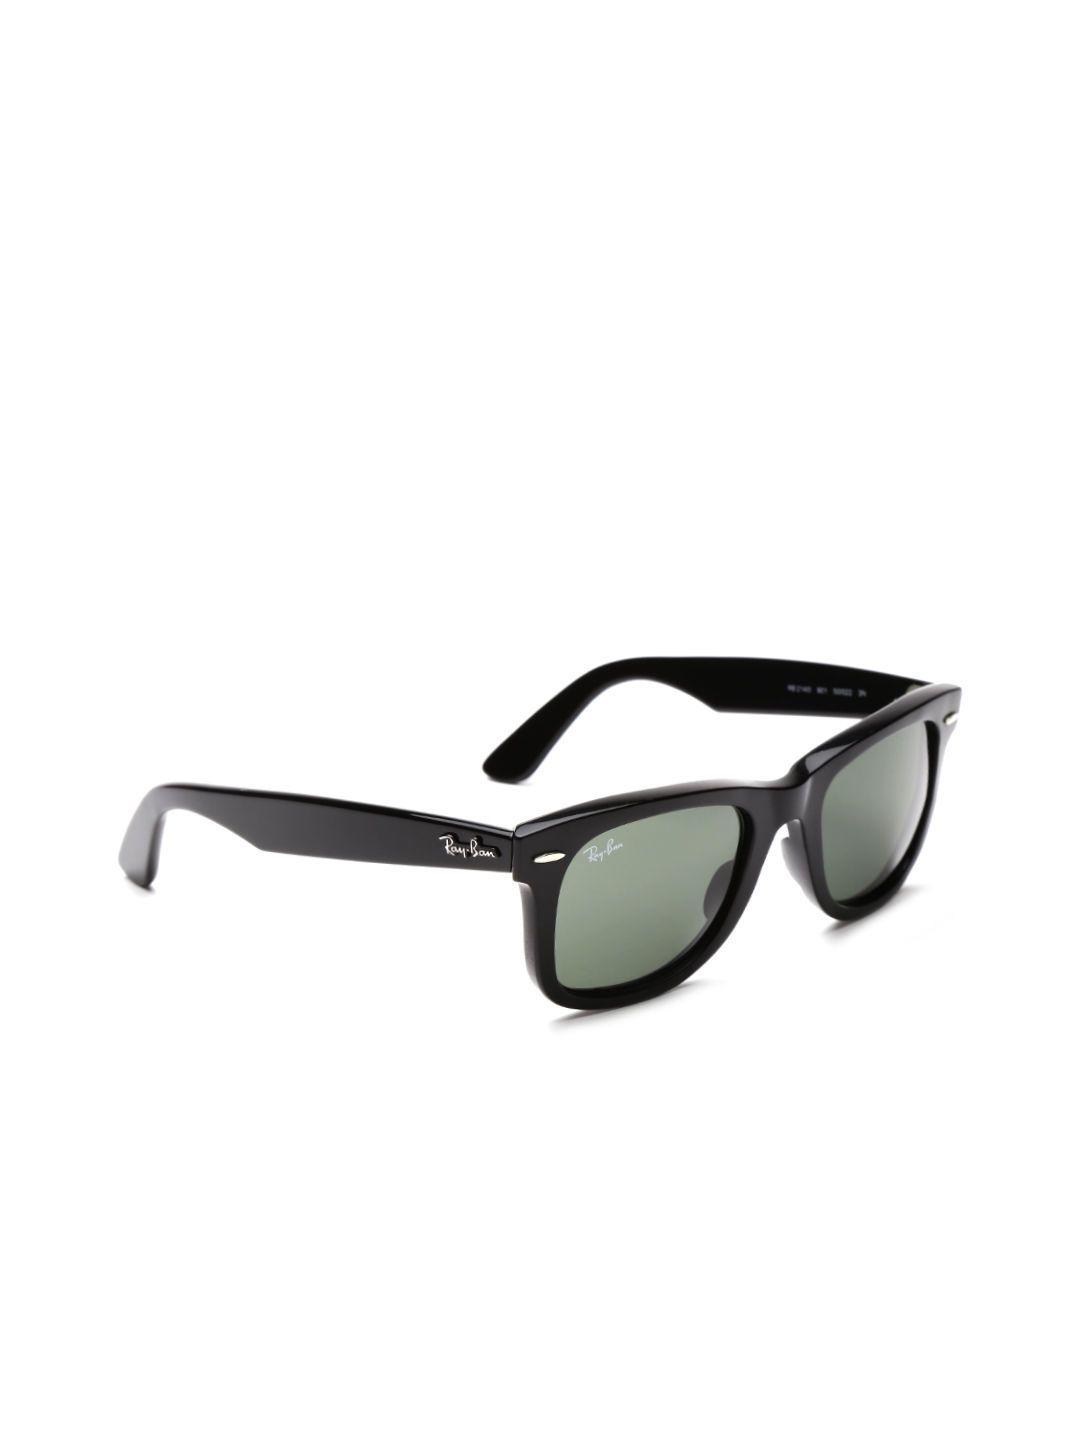 ray-ban unisex wayfarer sunglasses 0rb2140